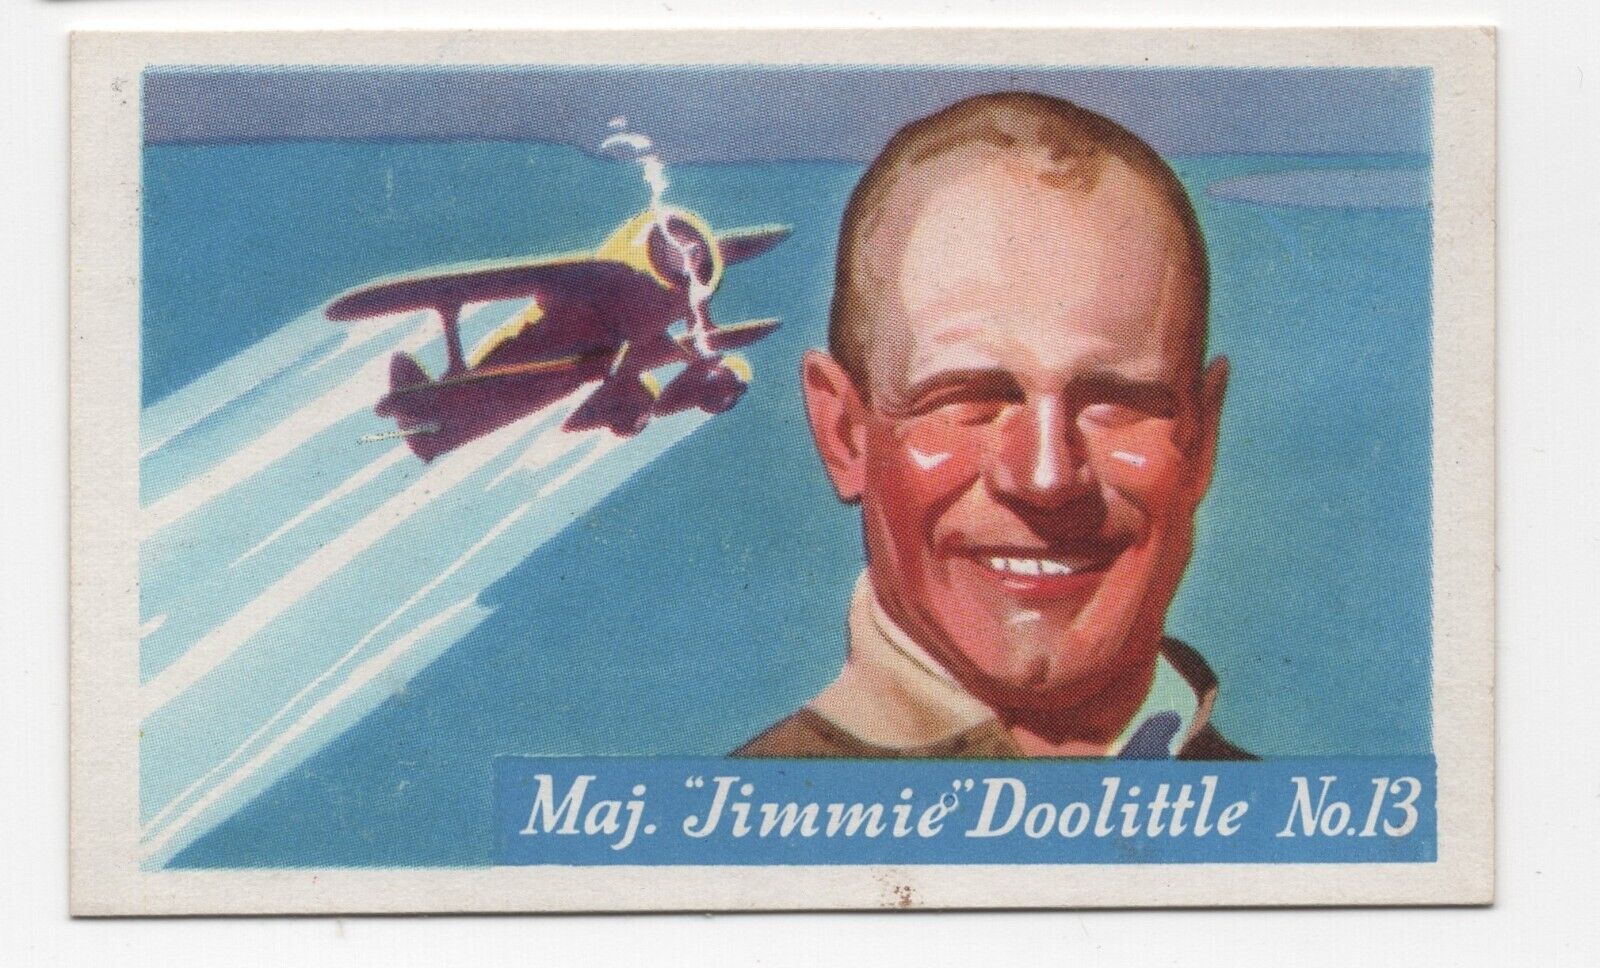 1936 Jimmie Doolittle Cereal Card F277 Heinz FAMOUS AVIATORS 1ST Series Pilots